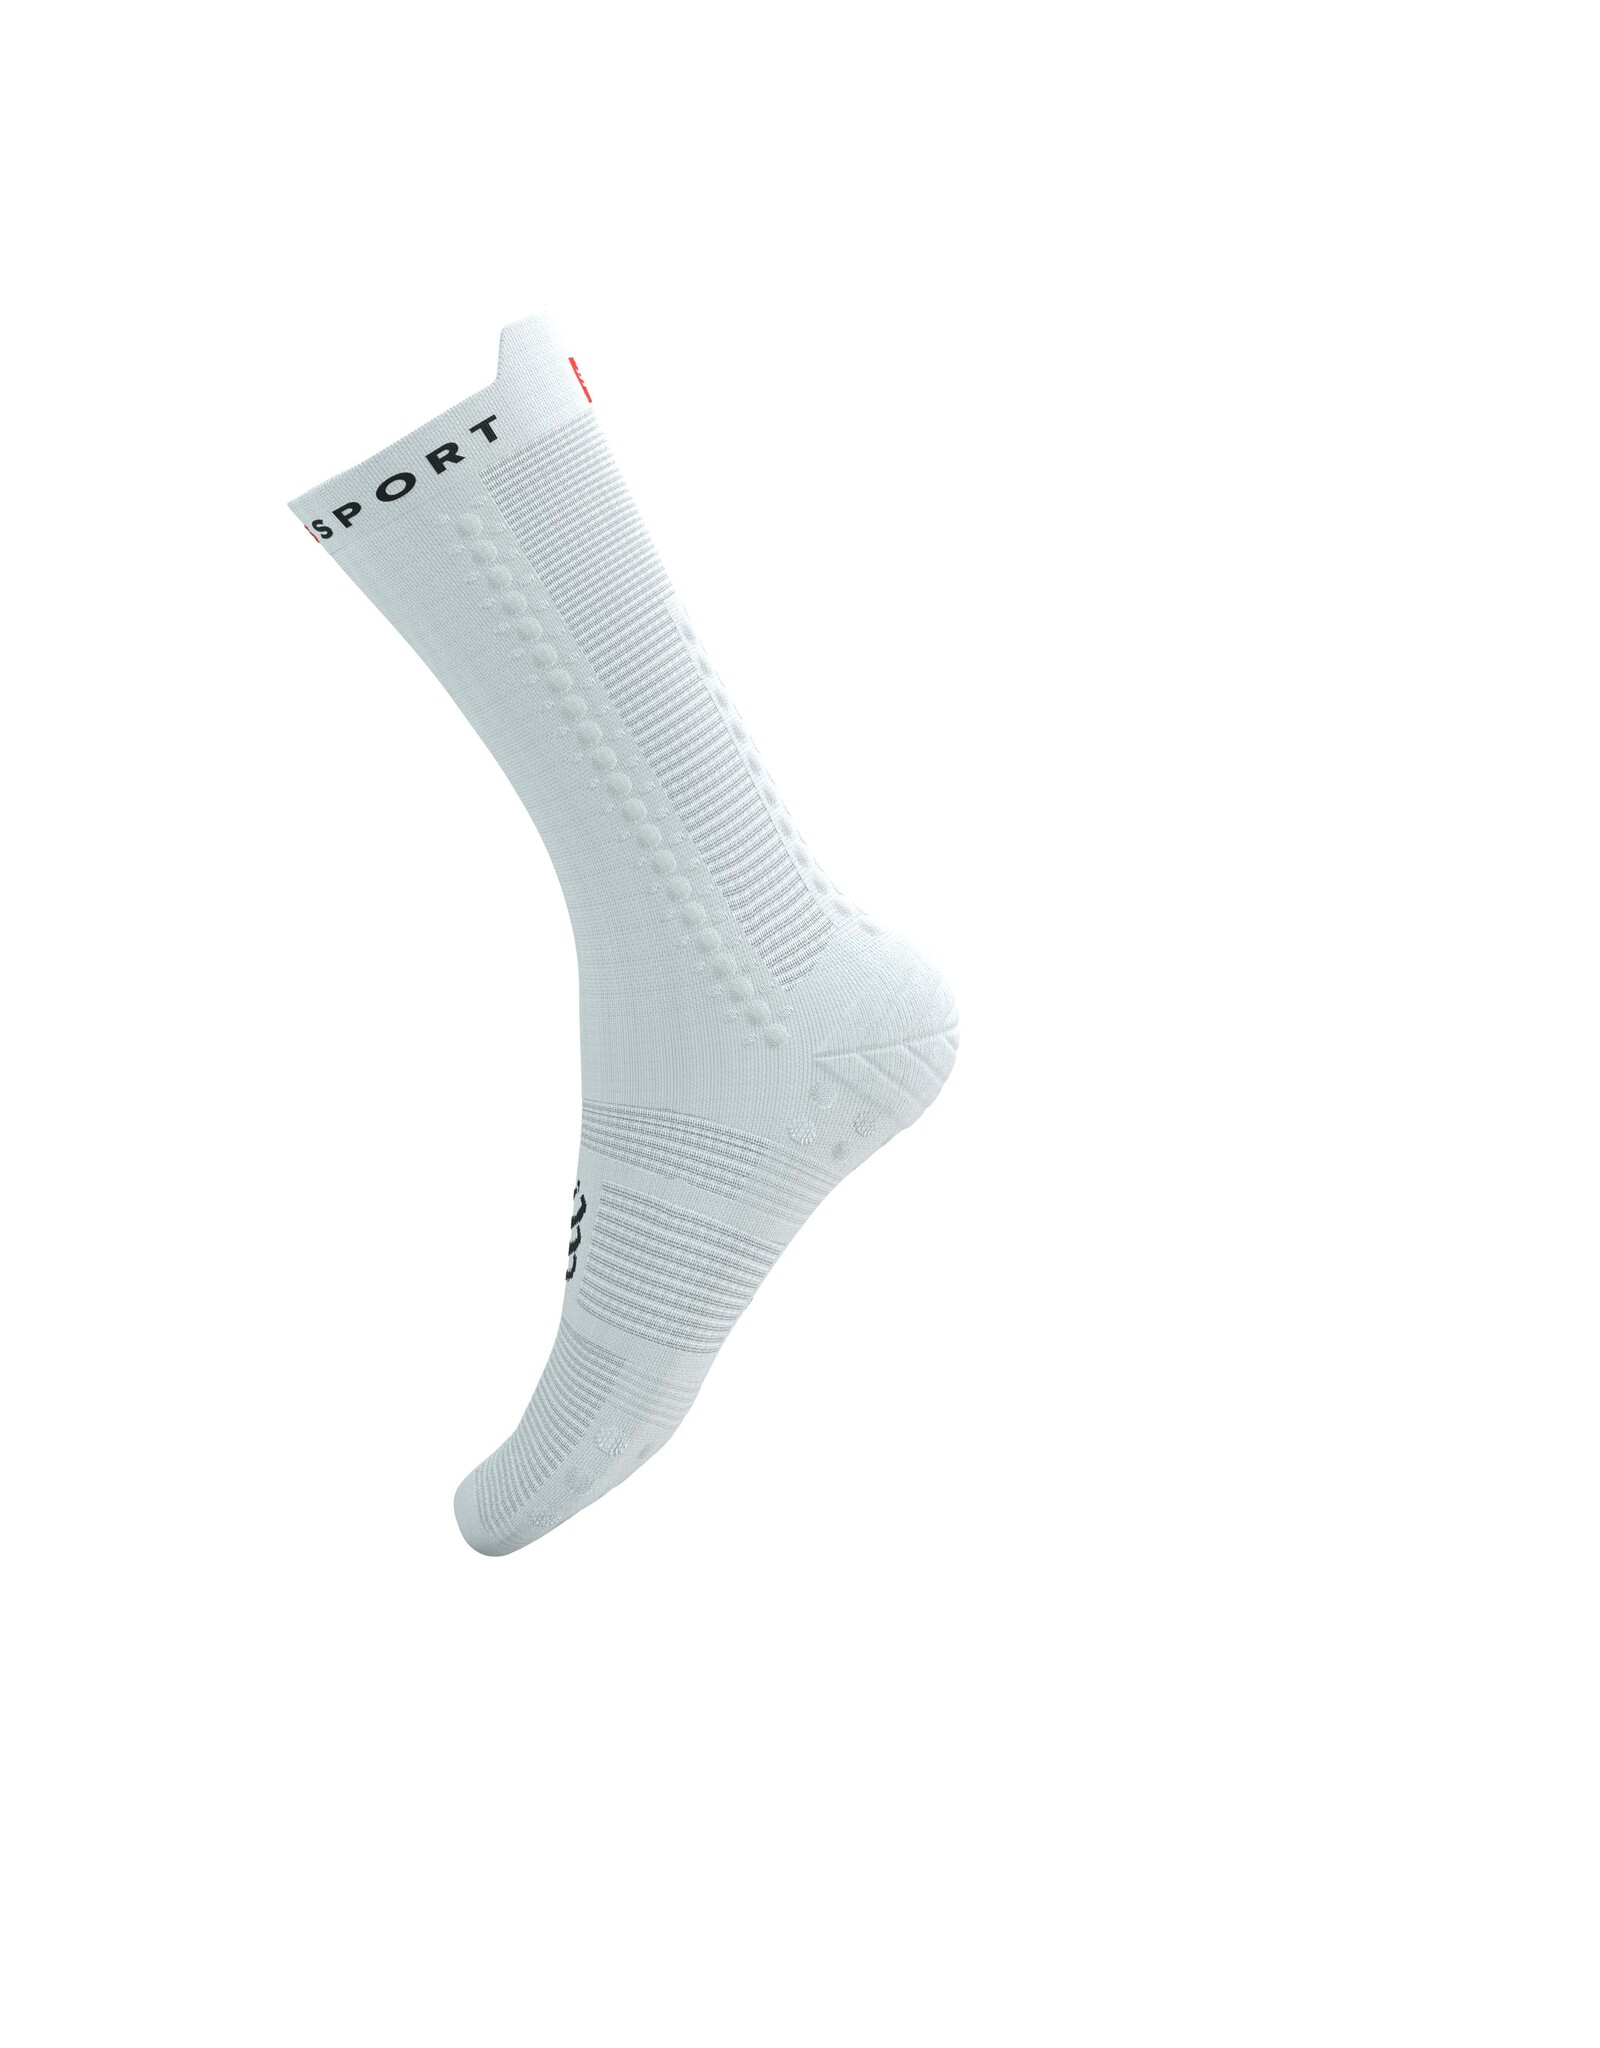 Compressport Pro Racing Socks v4.0 Bike - White/Black